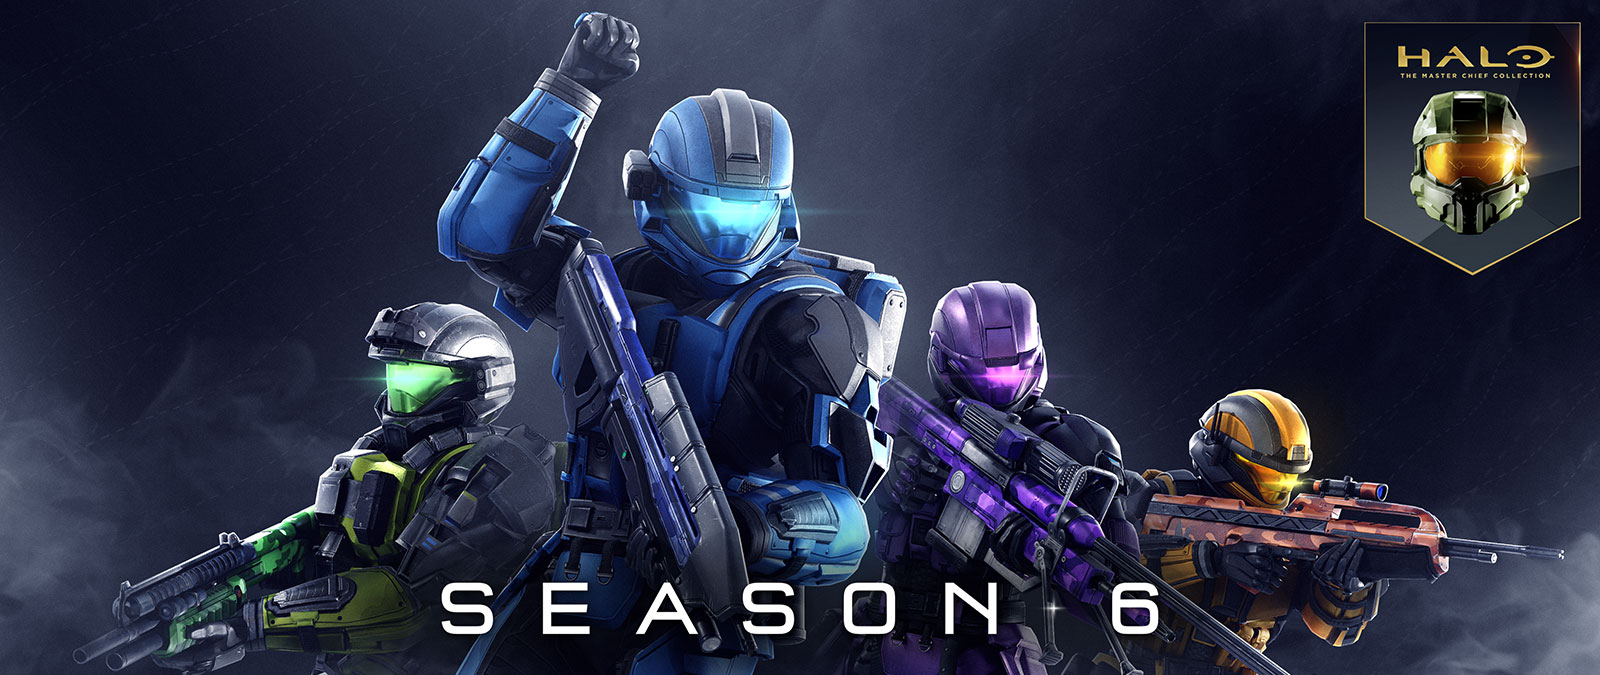 Halo: The Master Chief Collection，Season 6，穿著色彩豐富的盔甲的超級戰士們拿著槍擺姿勢